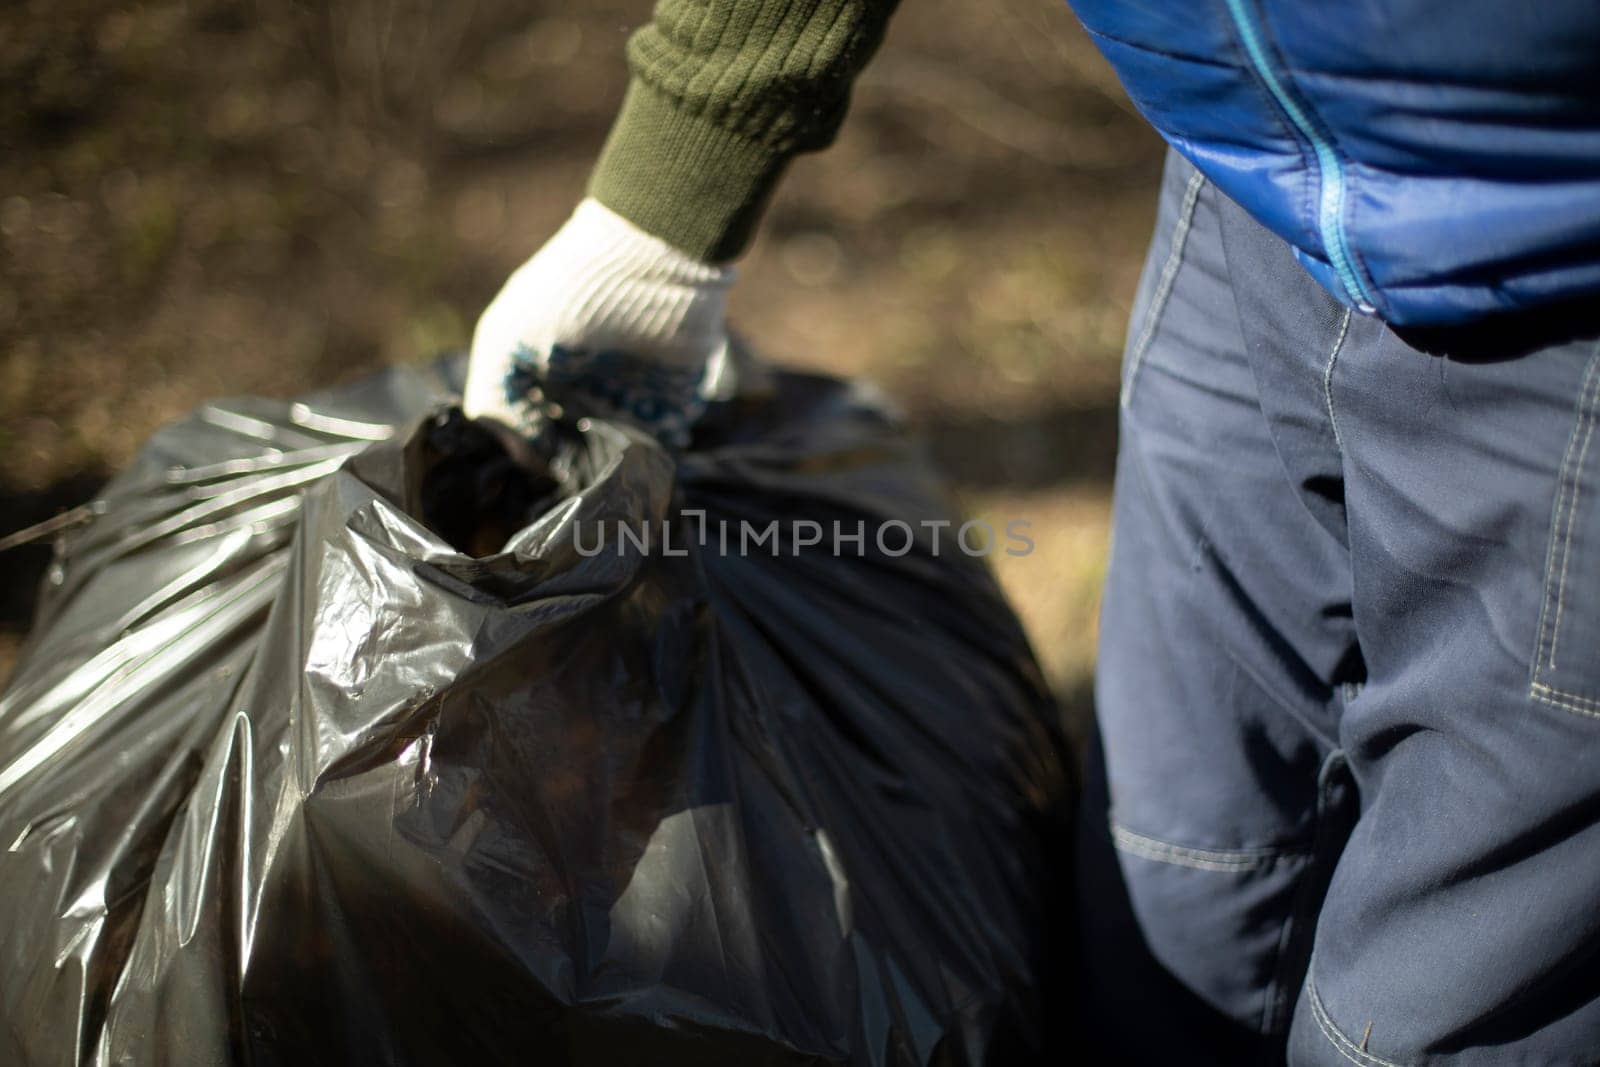 Garbage collection in bag. People clean up yard. Harvesting leaves in park.